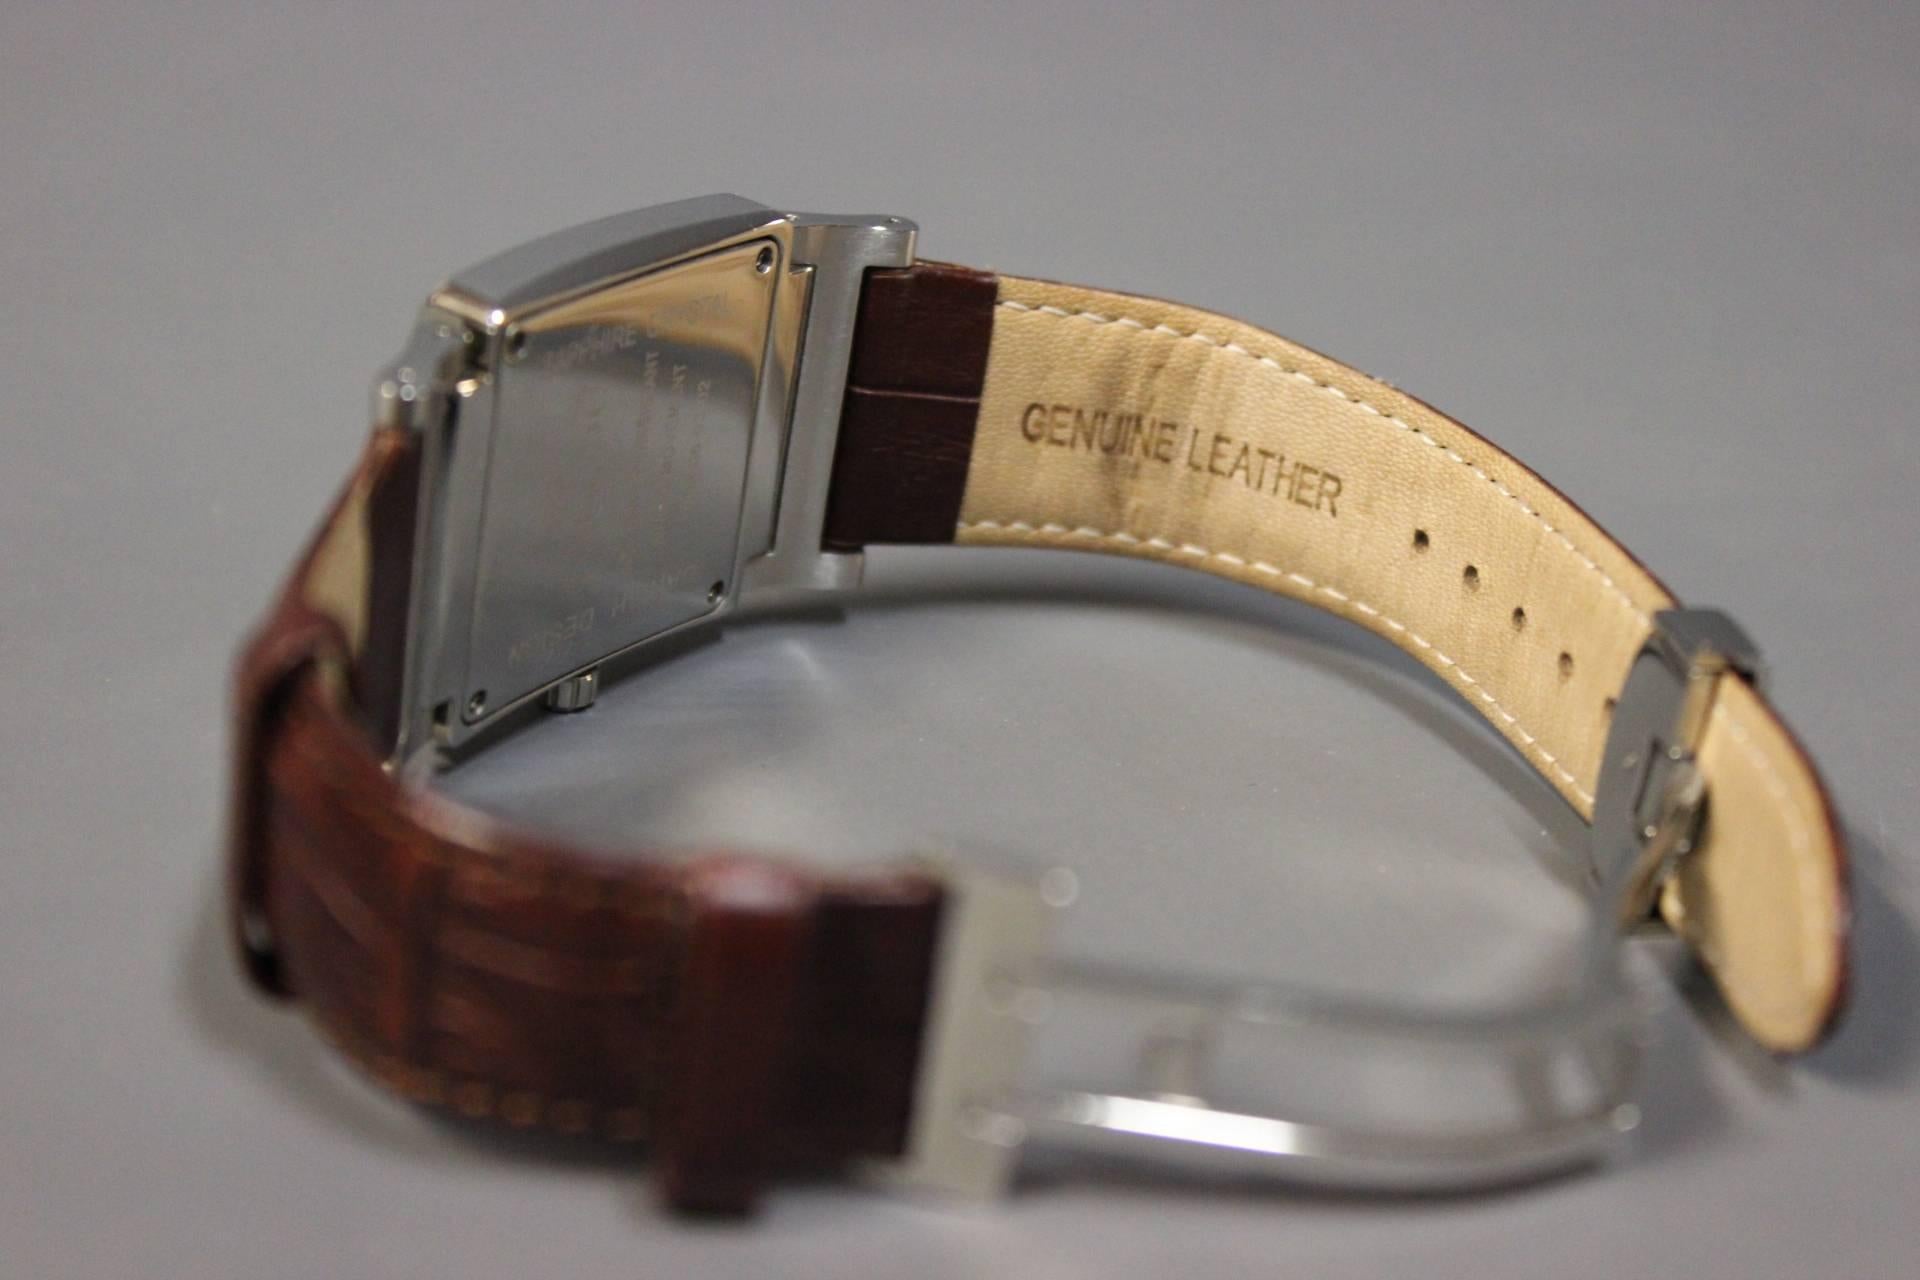 Contemporary Jullou Men's Wristwatch of Danish Design Embodied with Diamonds